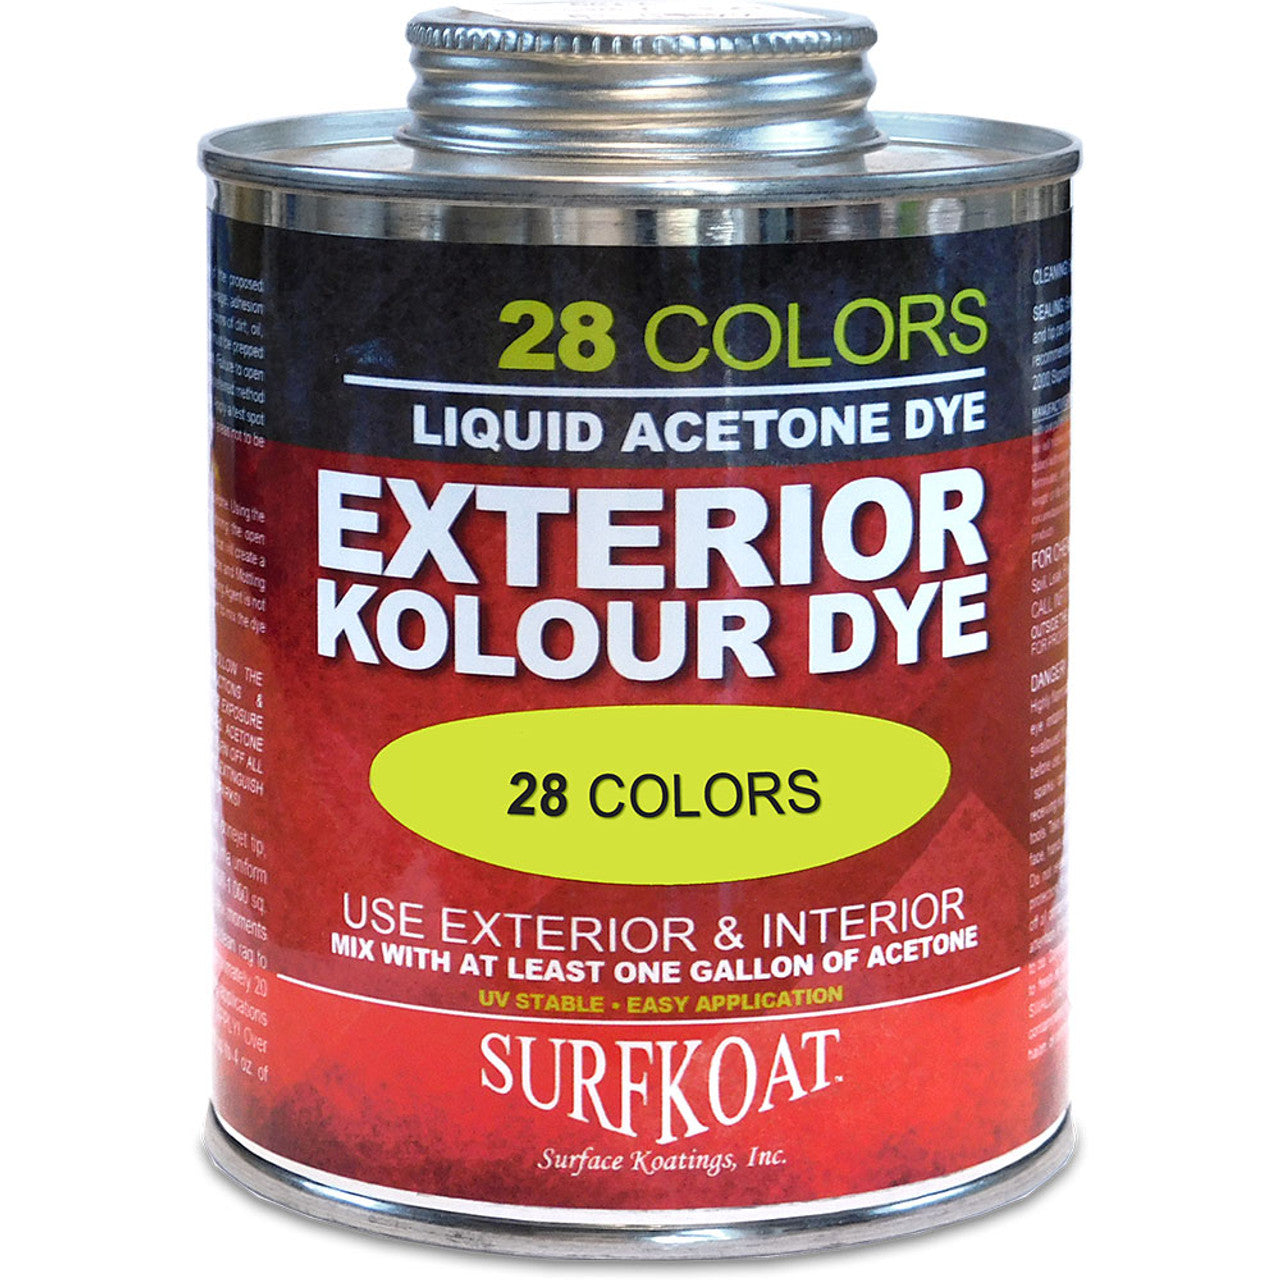 Kolour Dye (Turquoise) 1 Gallon Concentrate